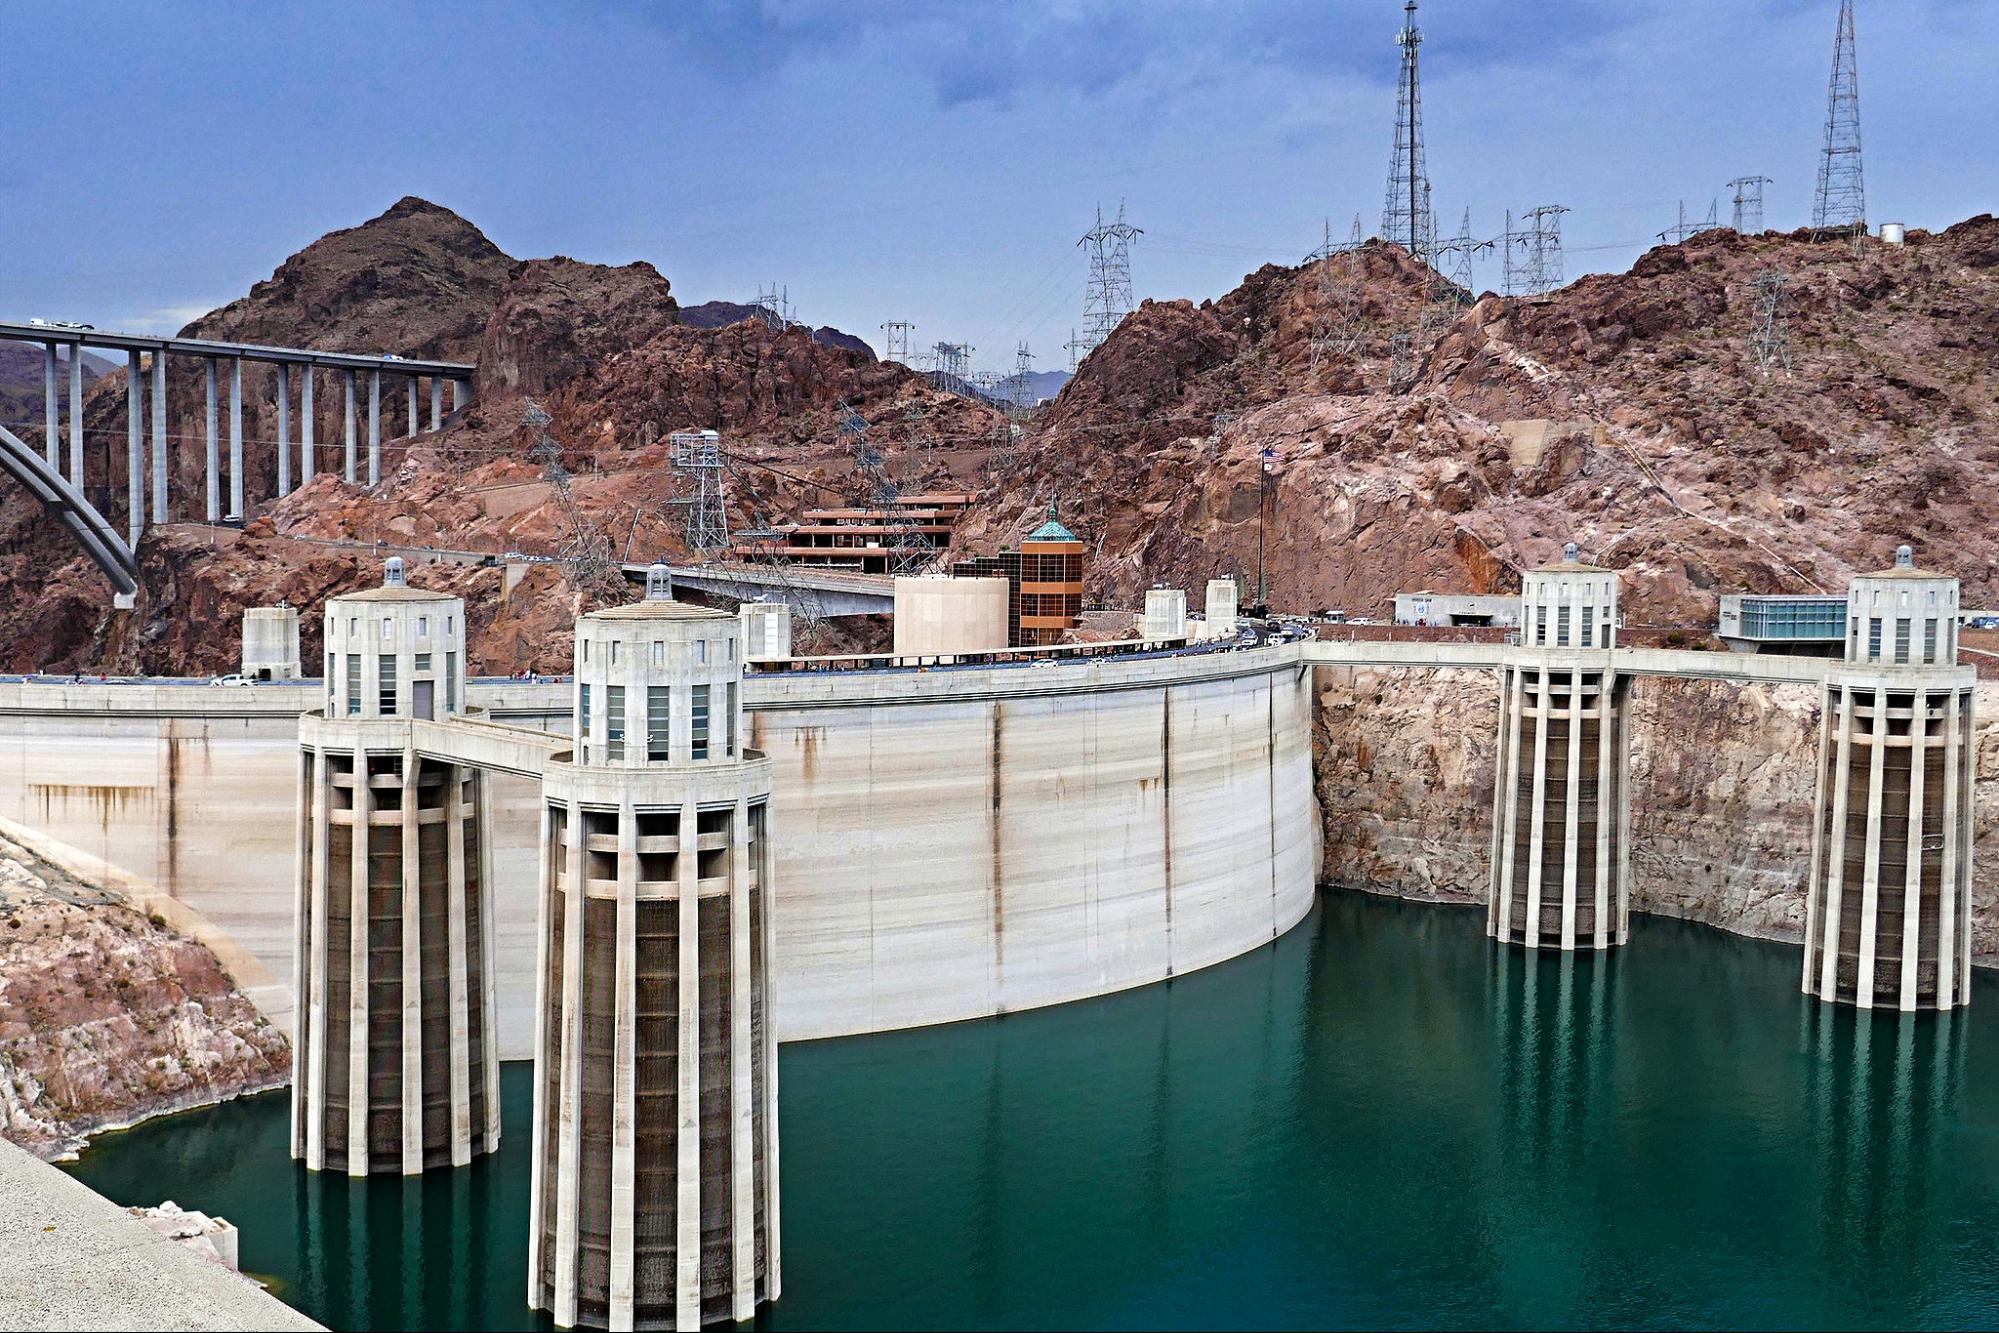 Hydropower Decline in Drought Strains Power Grids